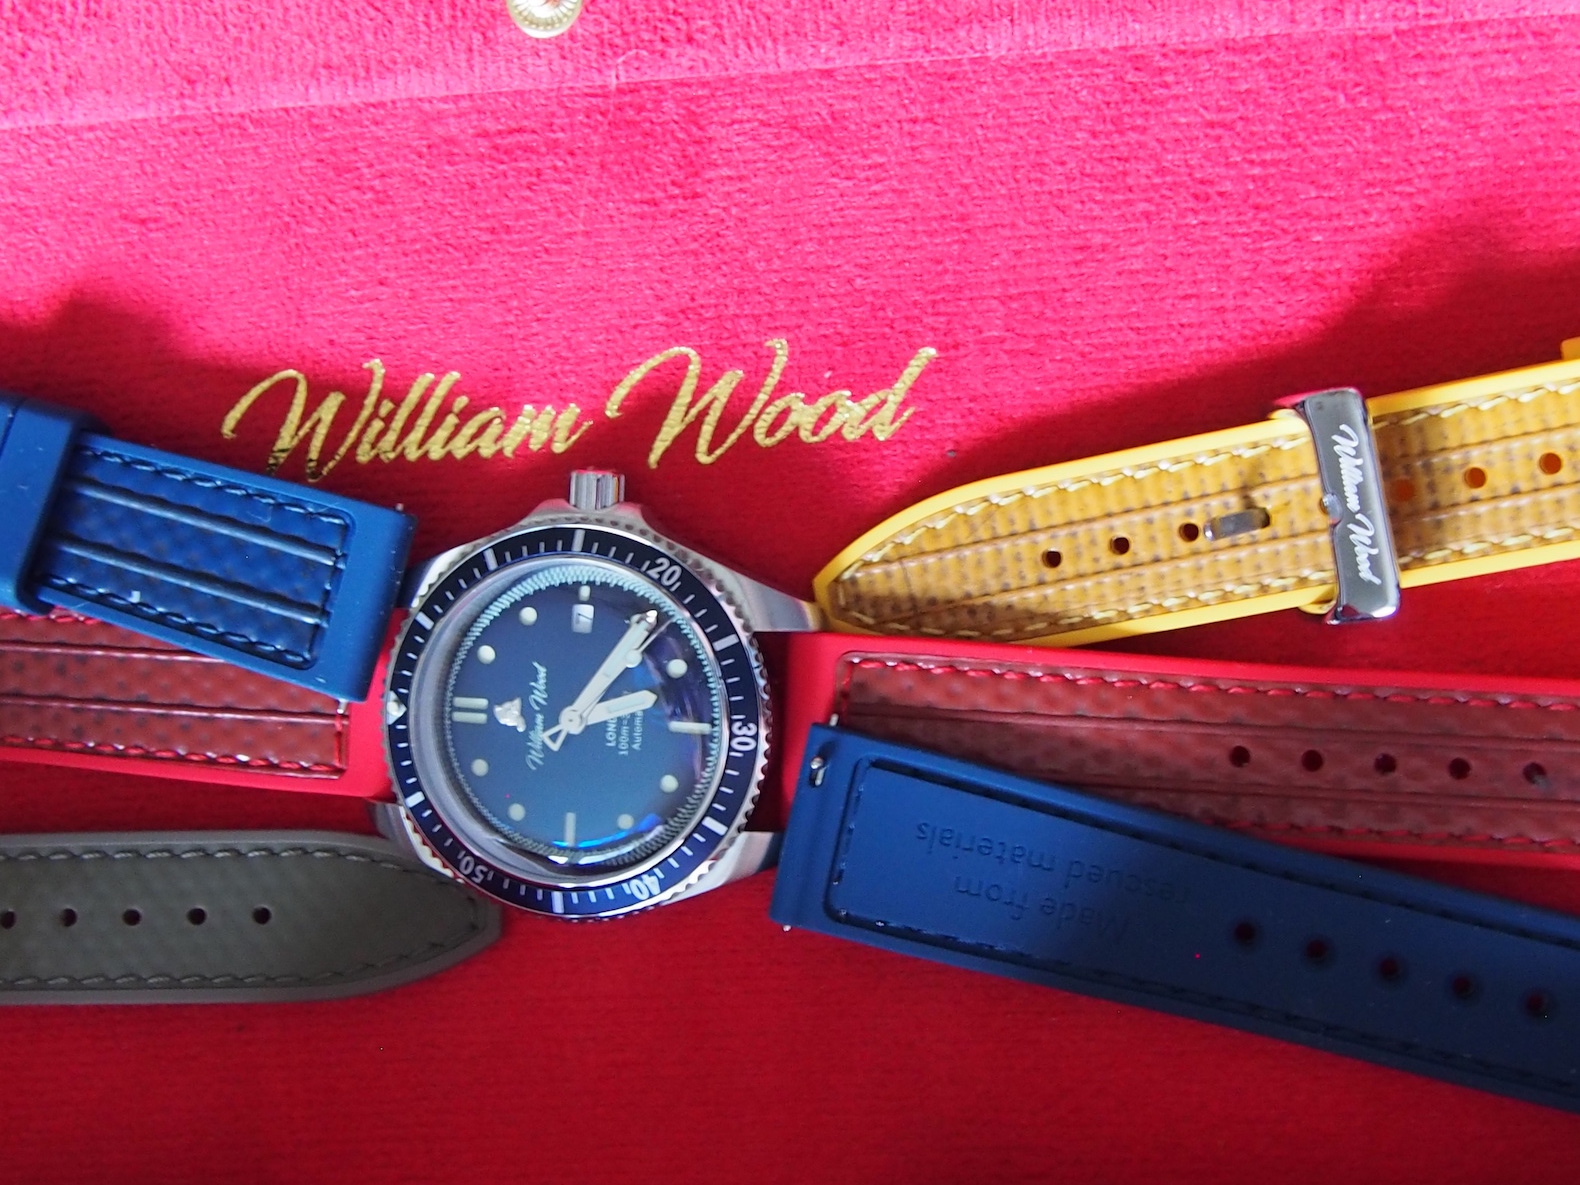 William Wood Valiant Blue Watch